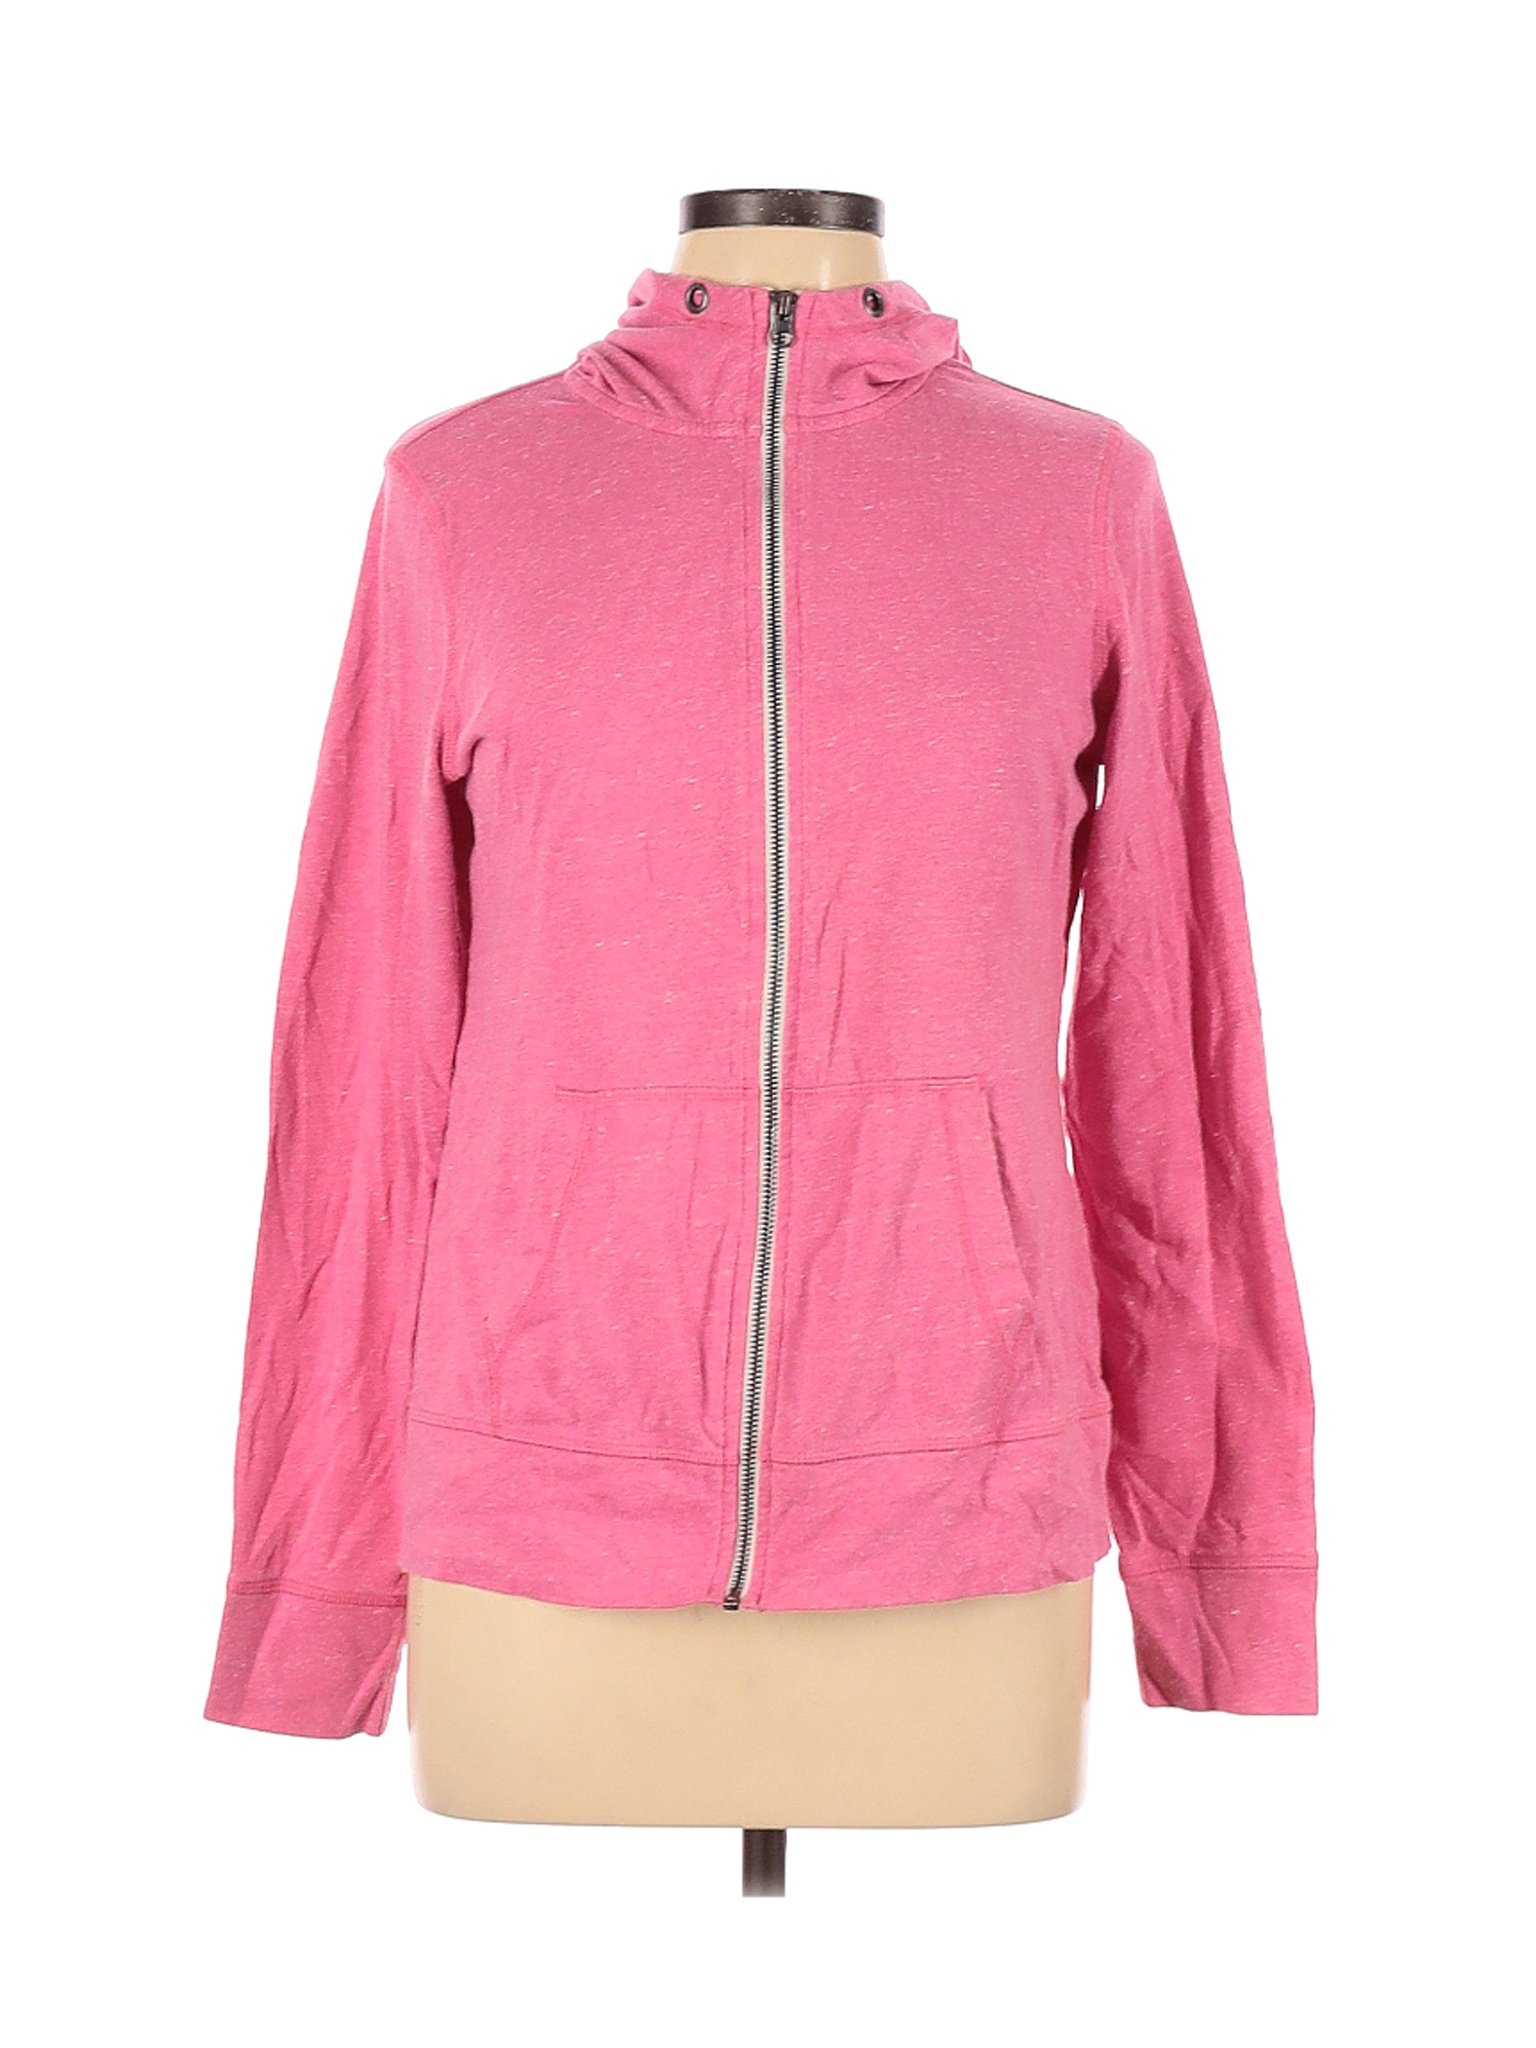 Danskin Now Women Pink Zip Up Hoodie L | eBay